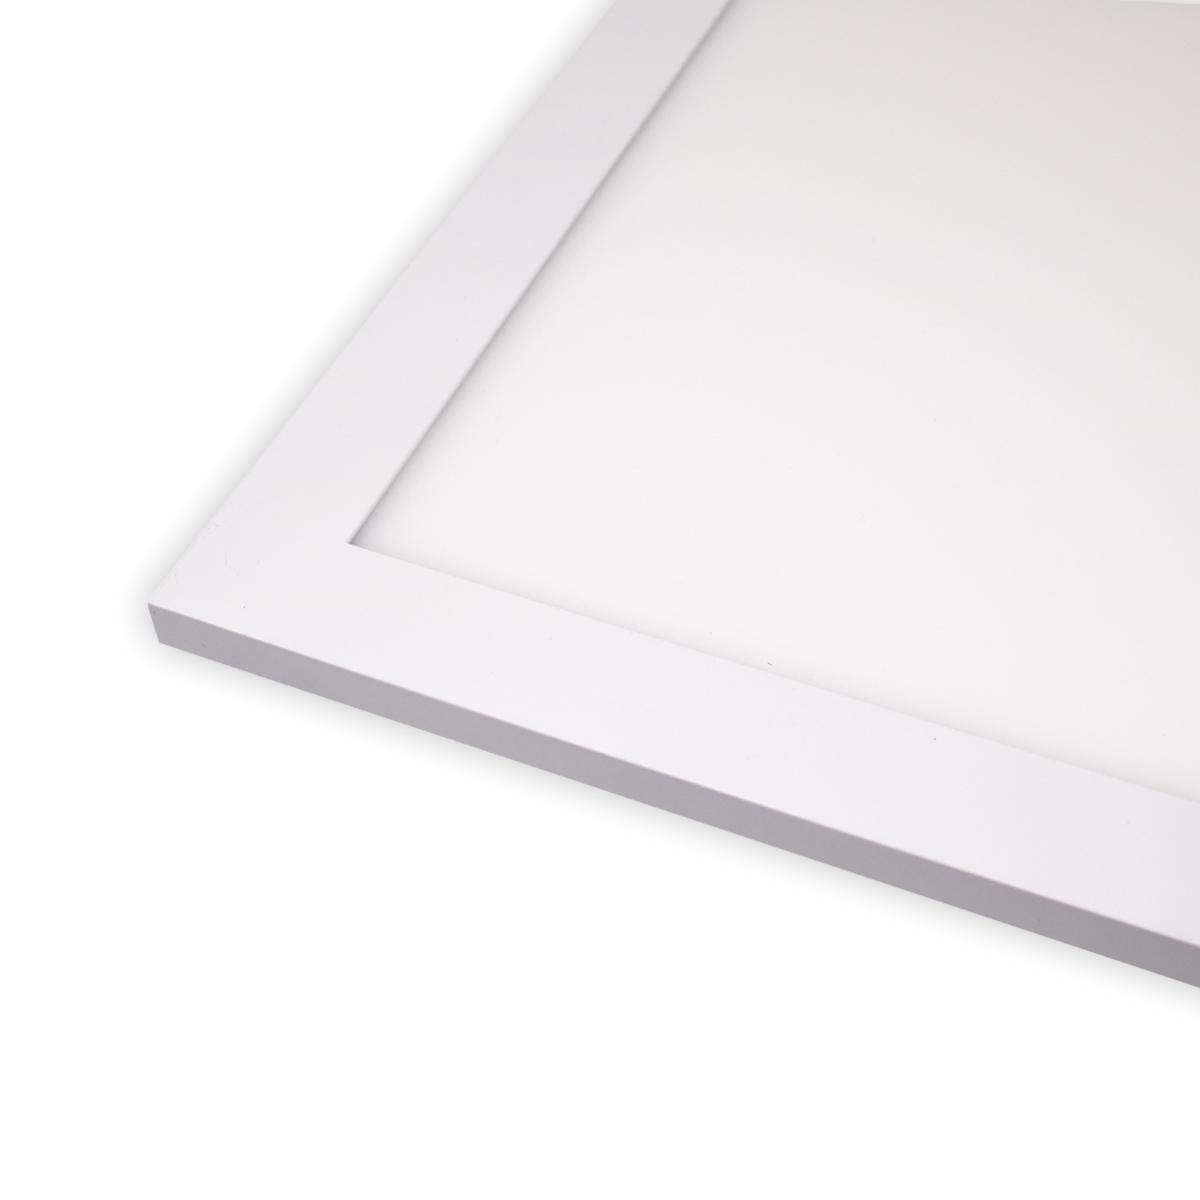 RGB+CCT LED Panel 60x30cm inkl. MiBoxer Smarthomesteuerung 24W 24V Rahmen weiß - Panelmontage:  Einbaurahmen weiß